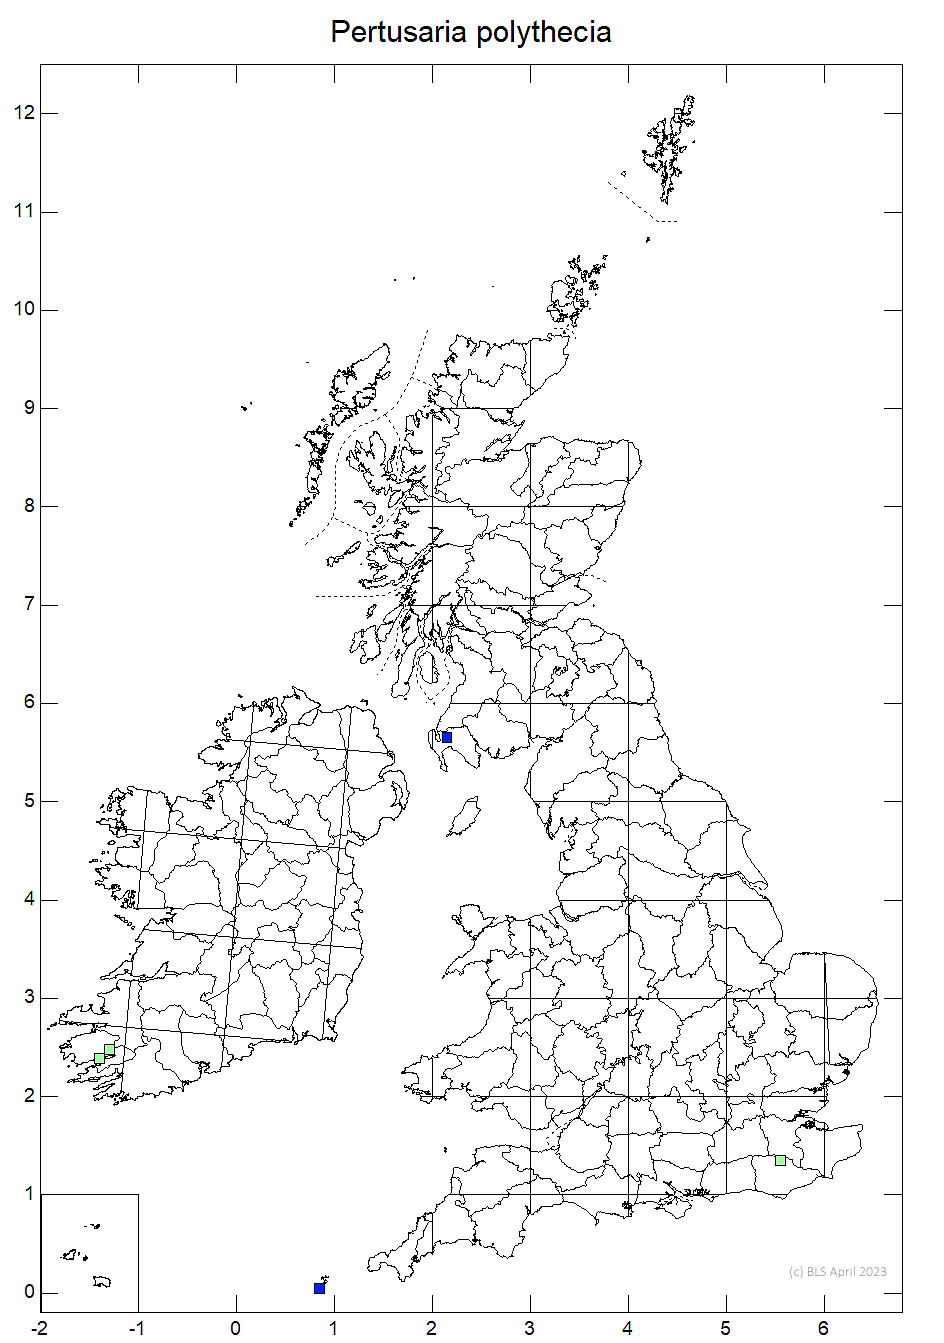 Pertusaria polythecia 10km sq distribution map